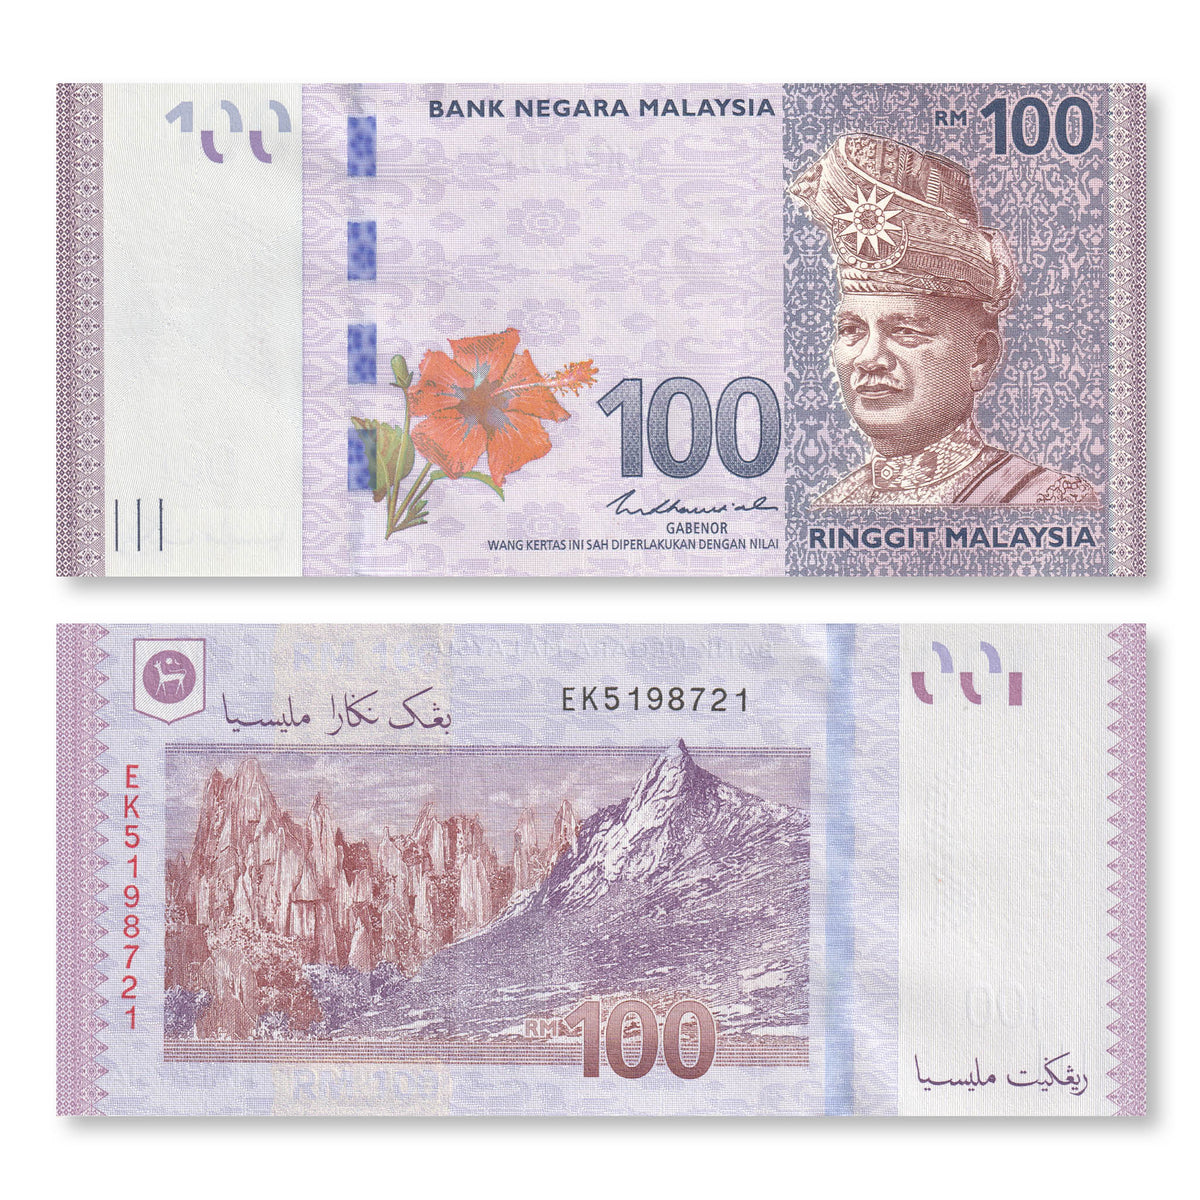 Malaysia 100 Ringgit, 2021, B153c, P56, UNC - Robert's World Money - World Banknotes